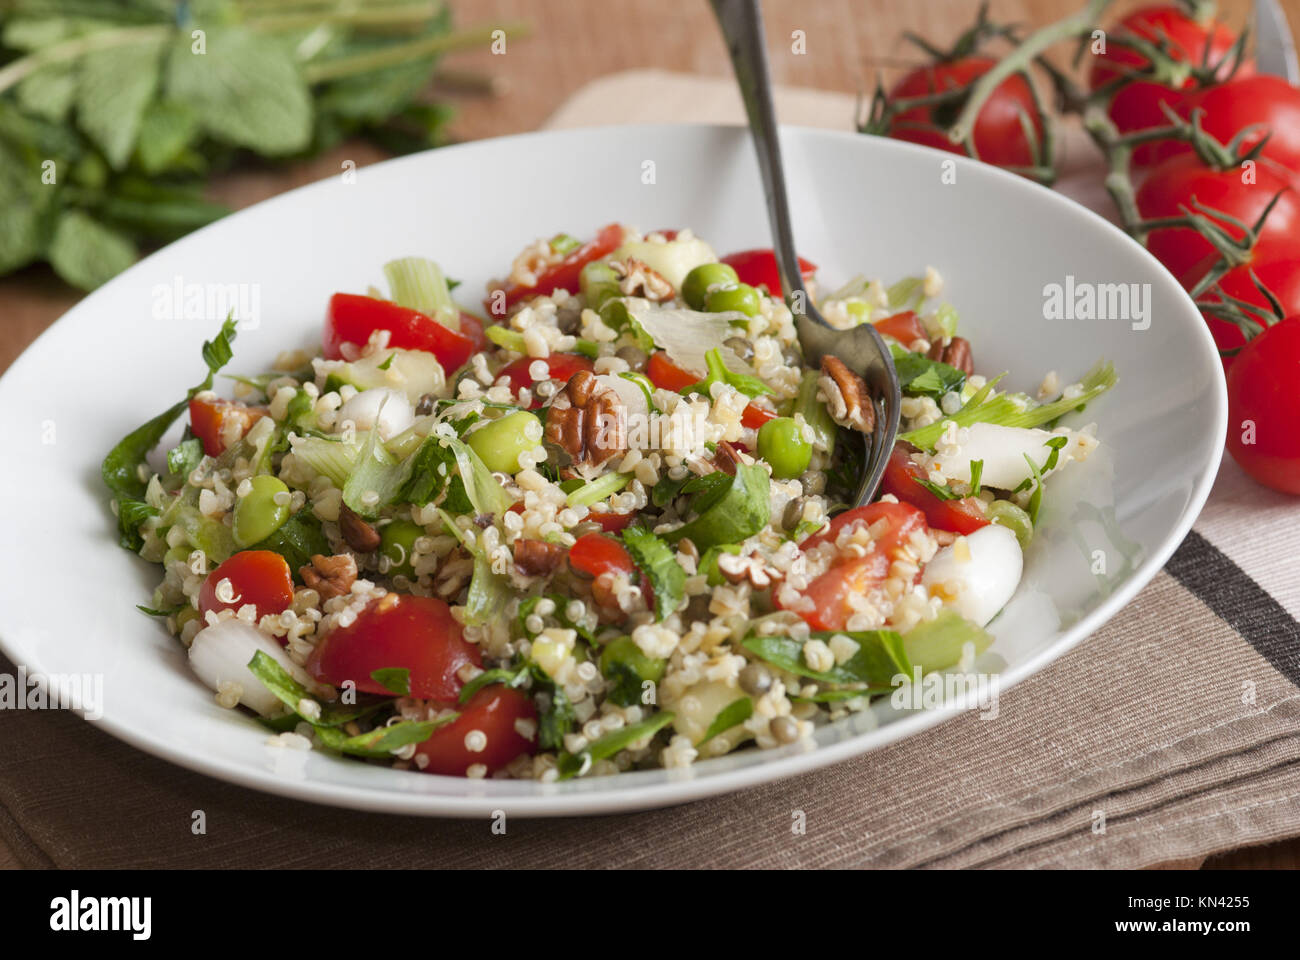 Türkisch Bulgur weizen Salat mit Gemüse Stockfotografie - Alamy